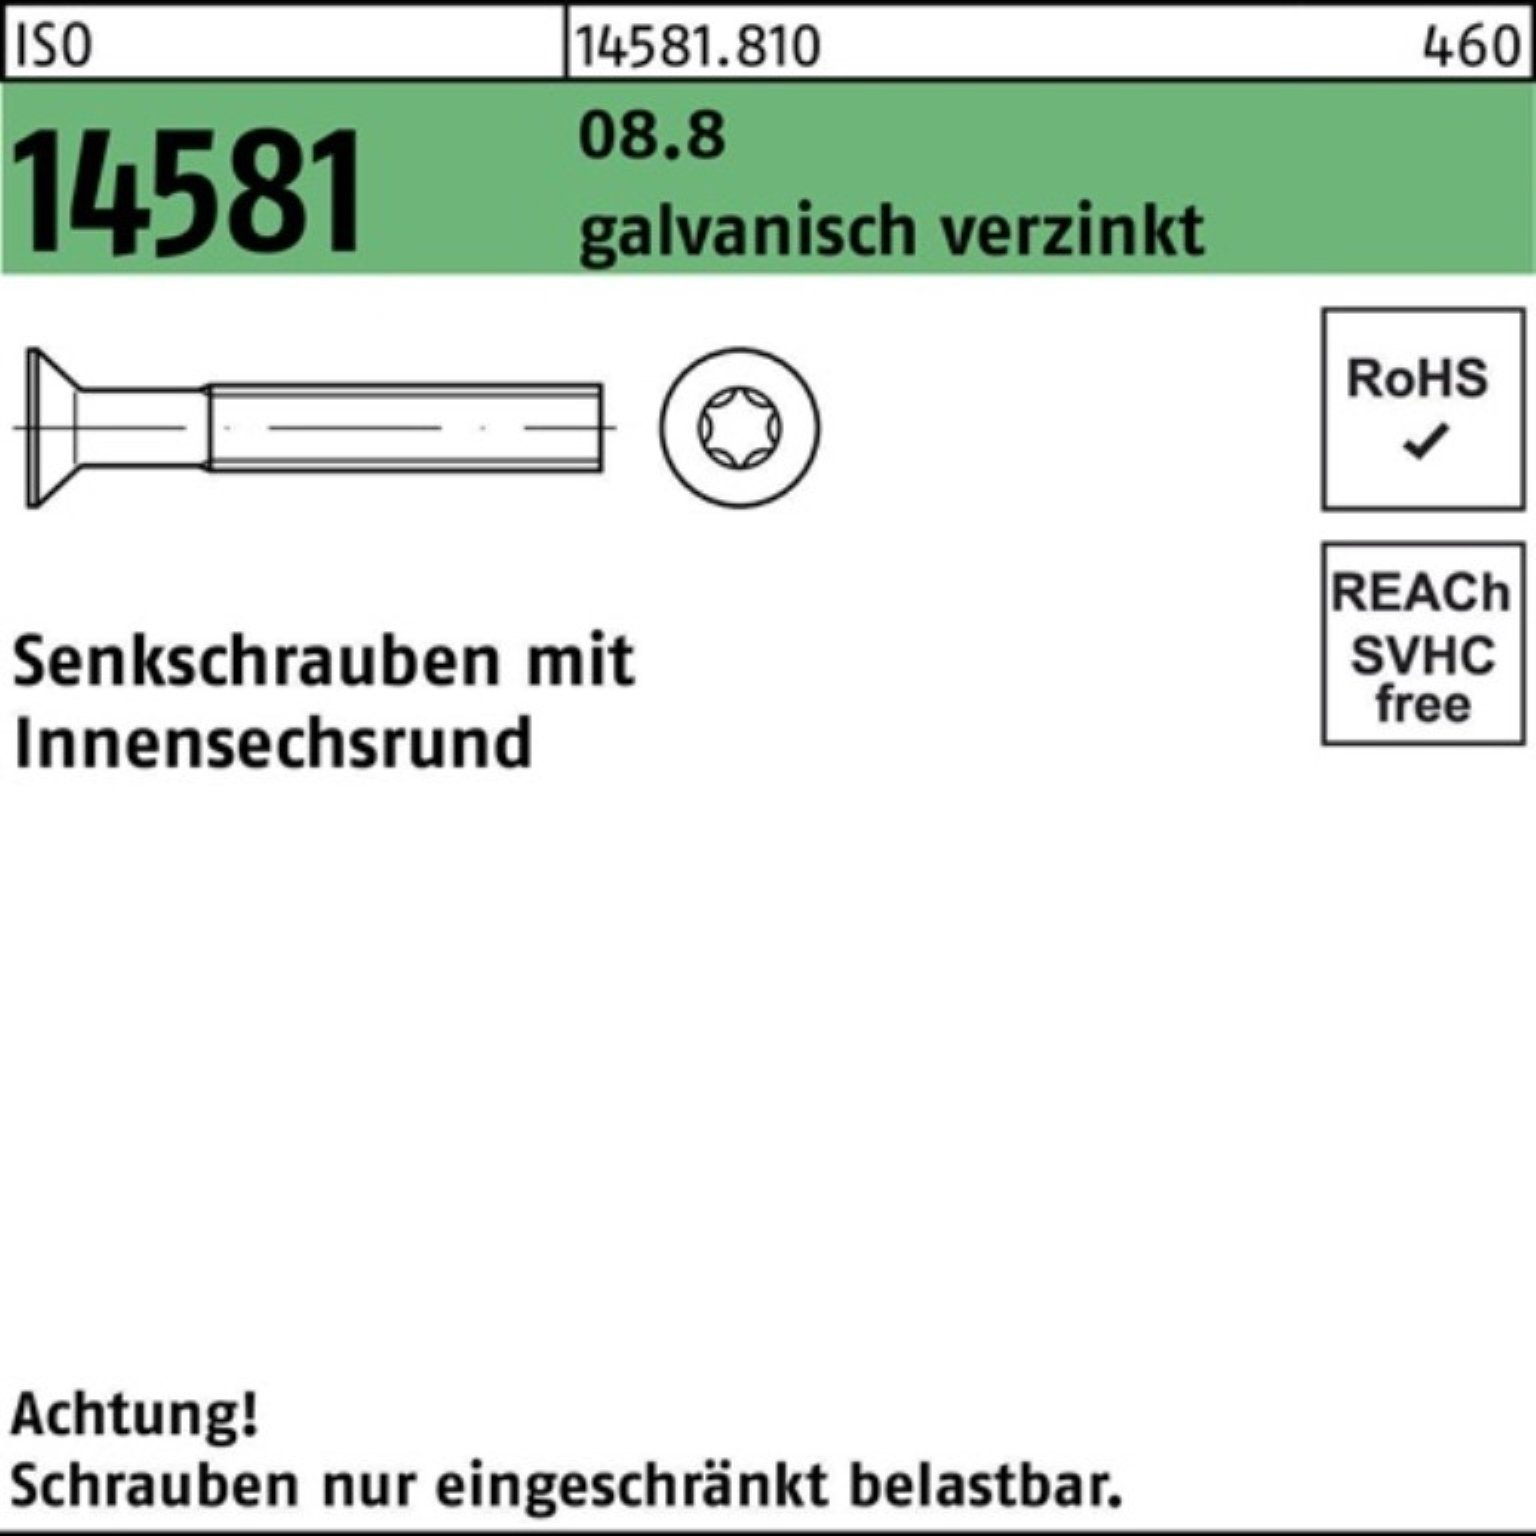 T25 Senkschraube 500er Senkschraube 500St. galv.verz. Pack Reyher 14581 8.8 ISO ISR M5x20